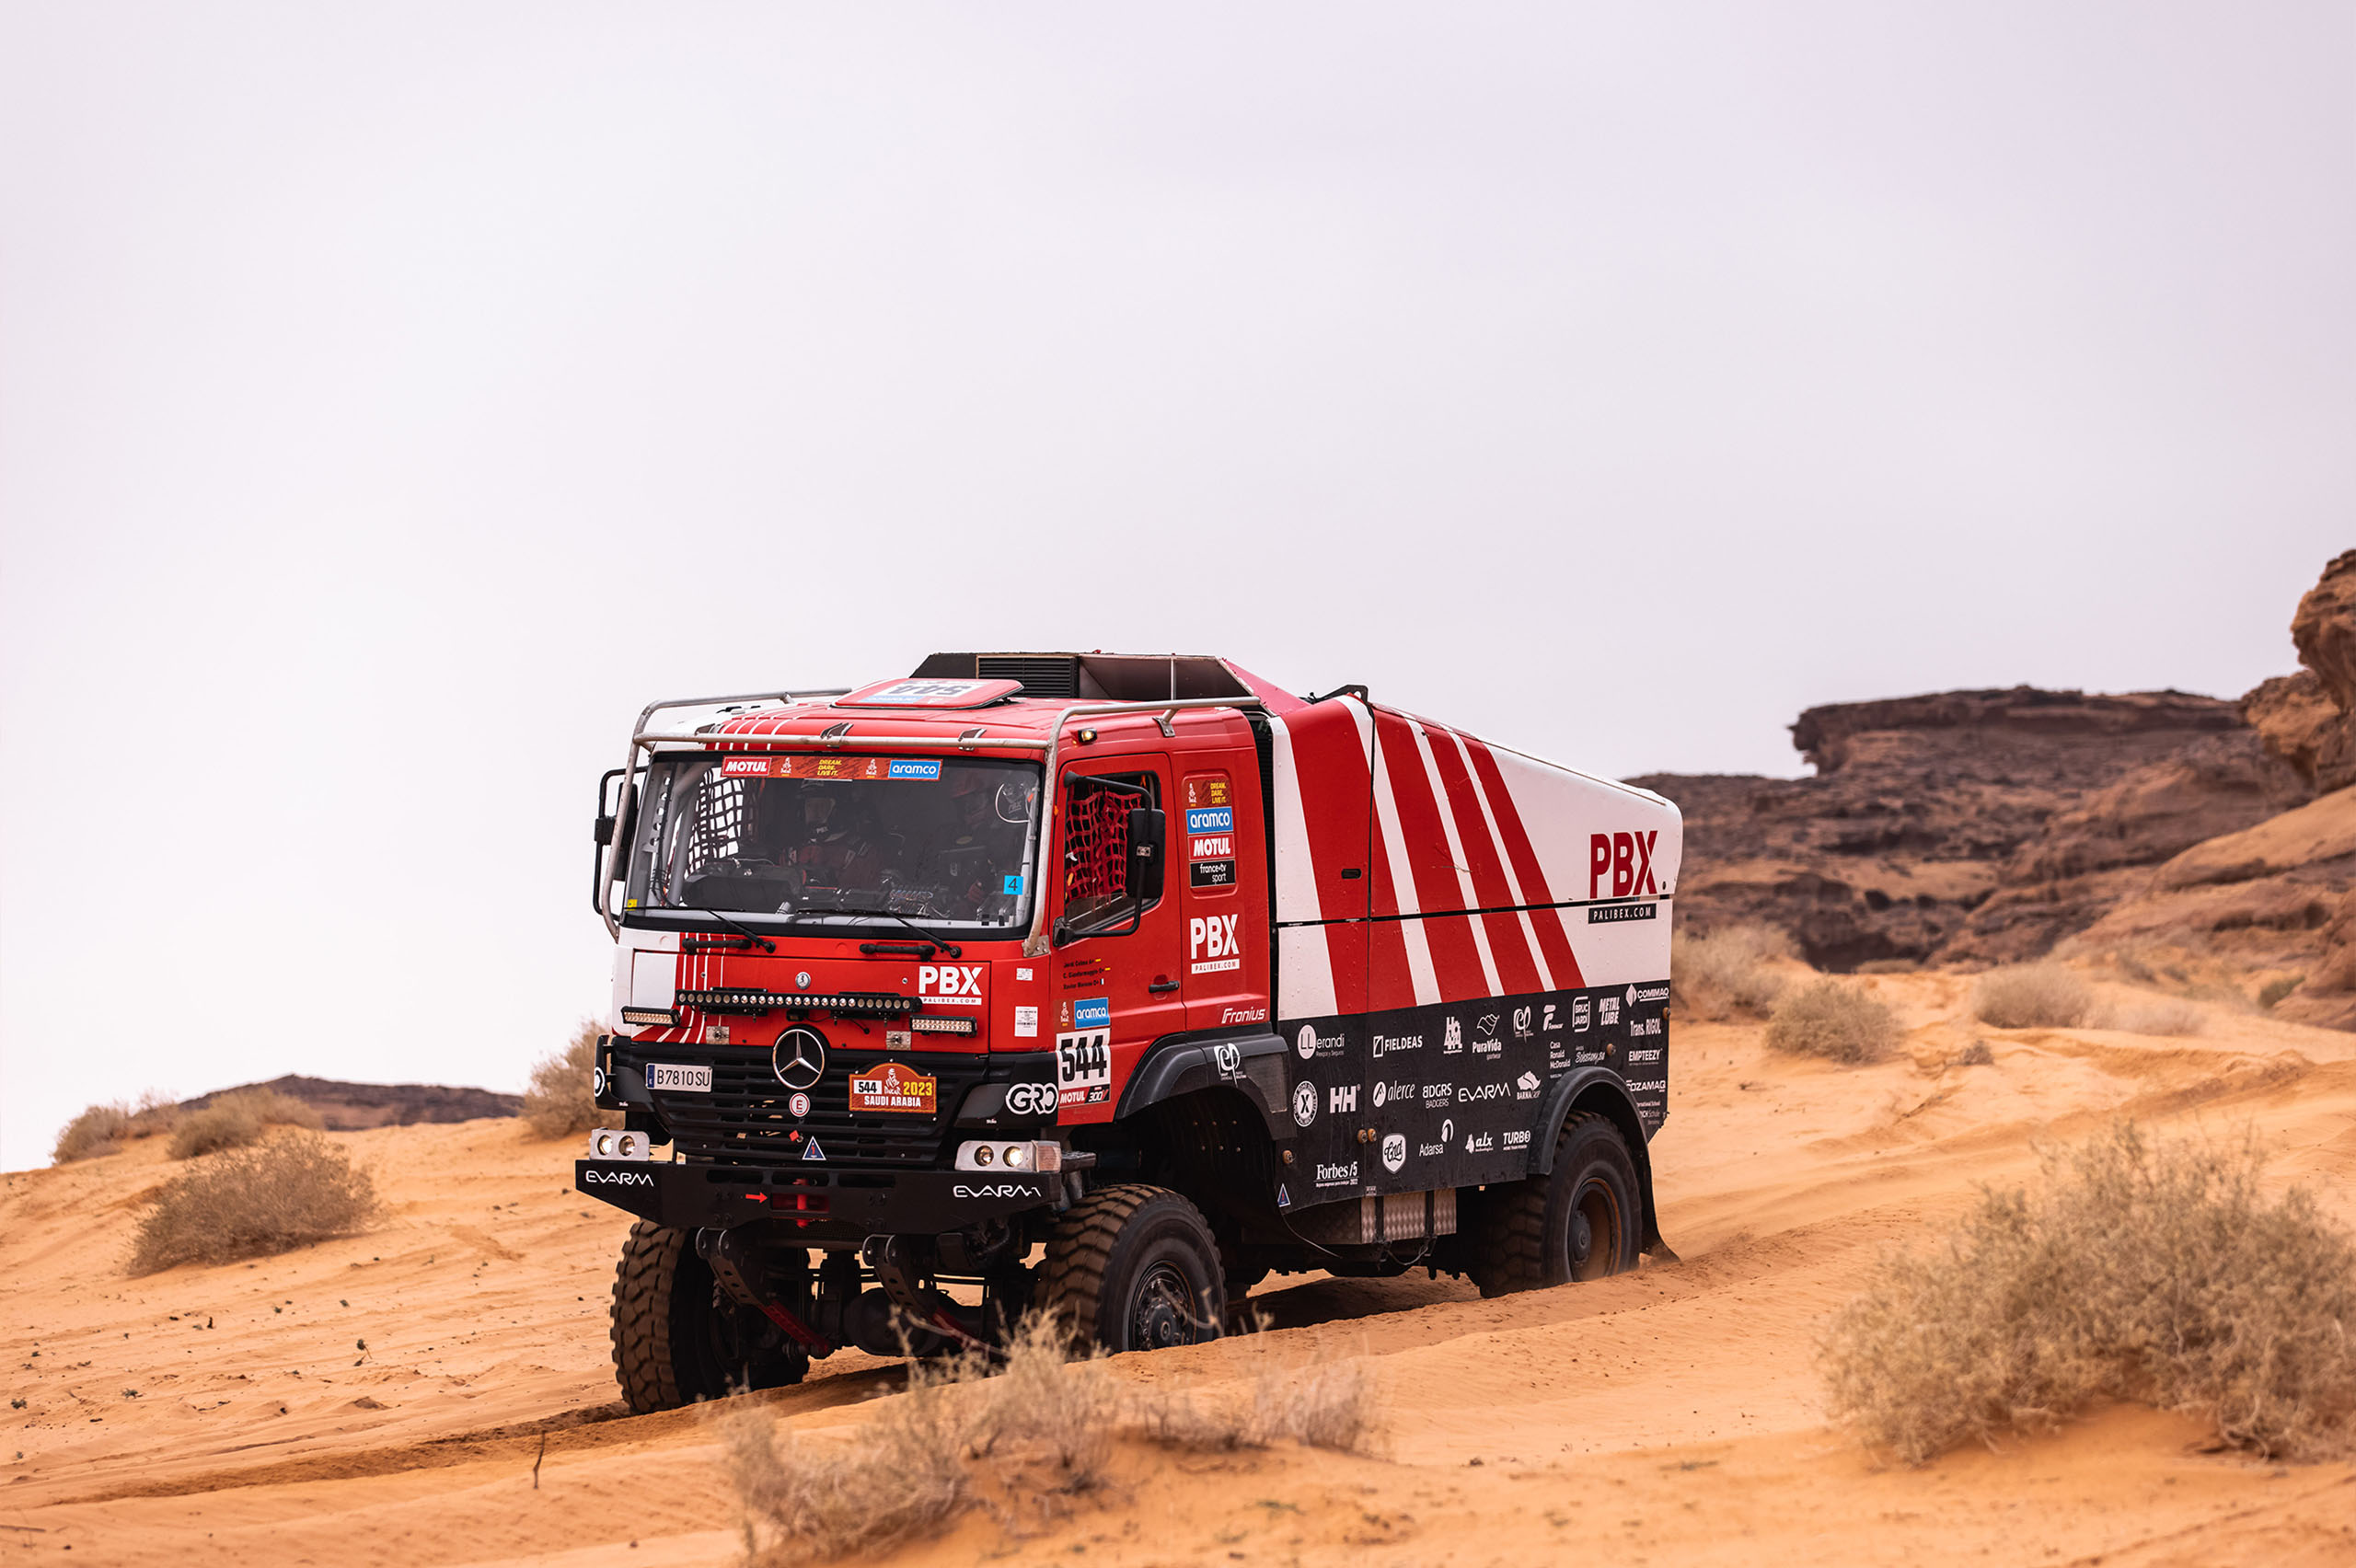 competicion todoterreno - camion dakar - camion dunas desierto - pbx dakar team - palibex